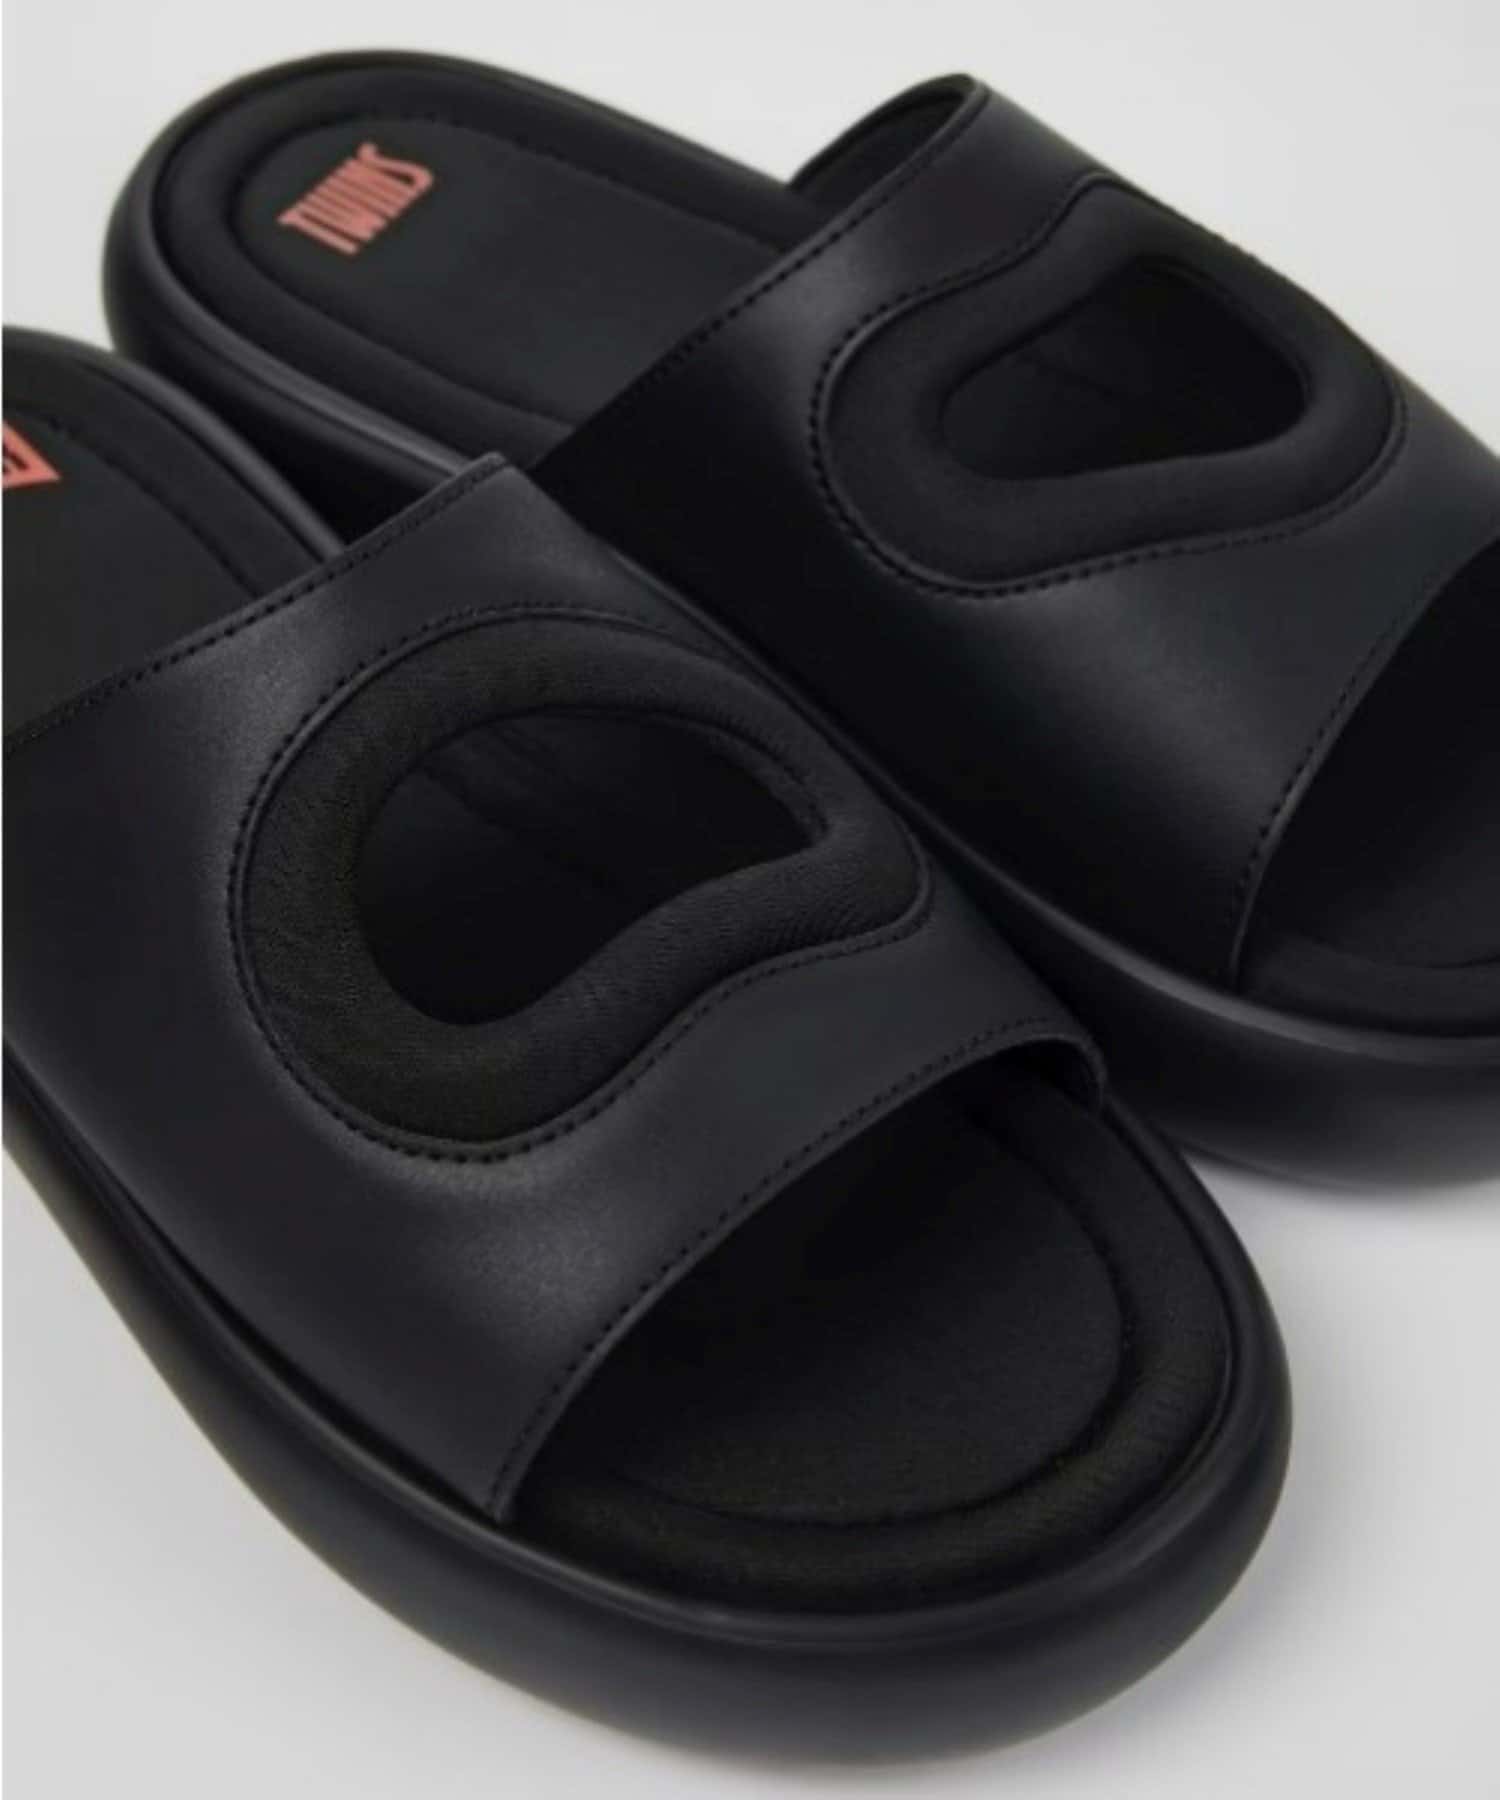 Pasterip(パセリ) TWS sandals